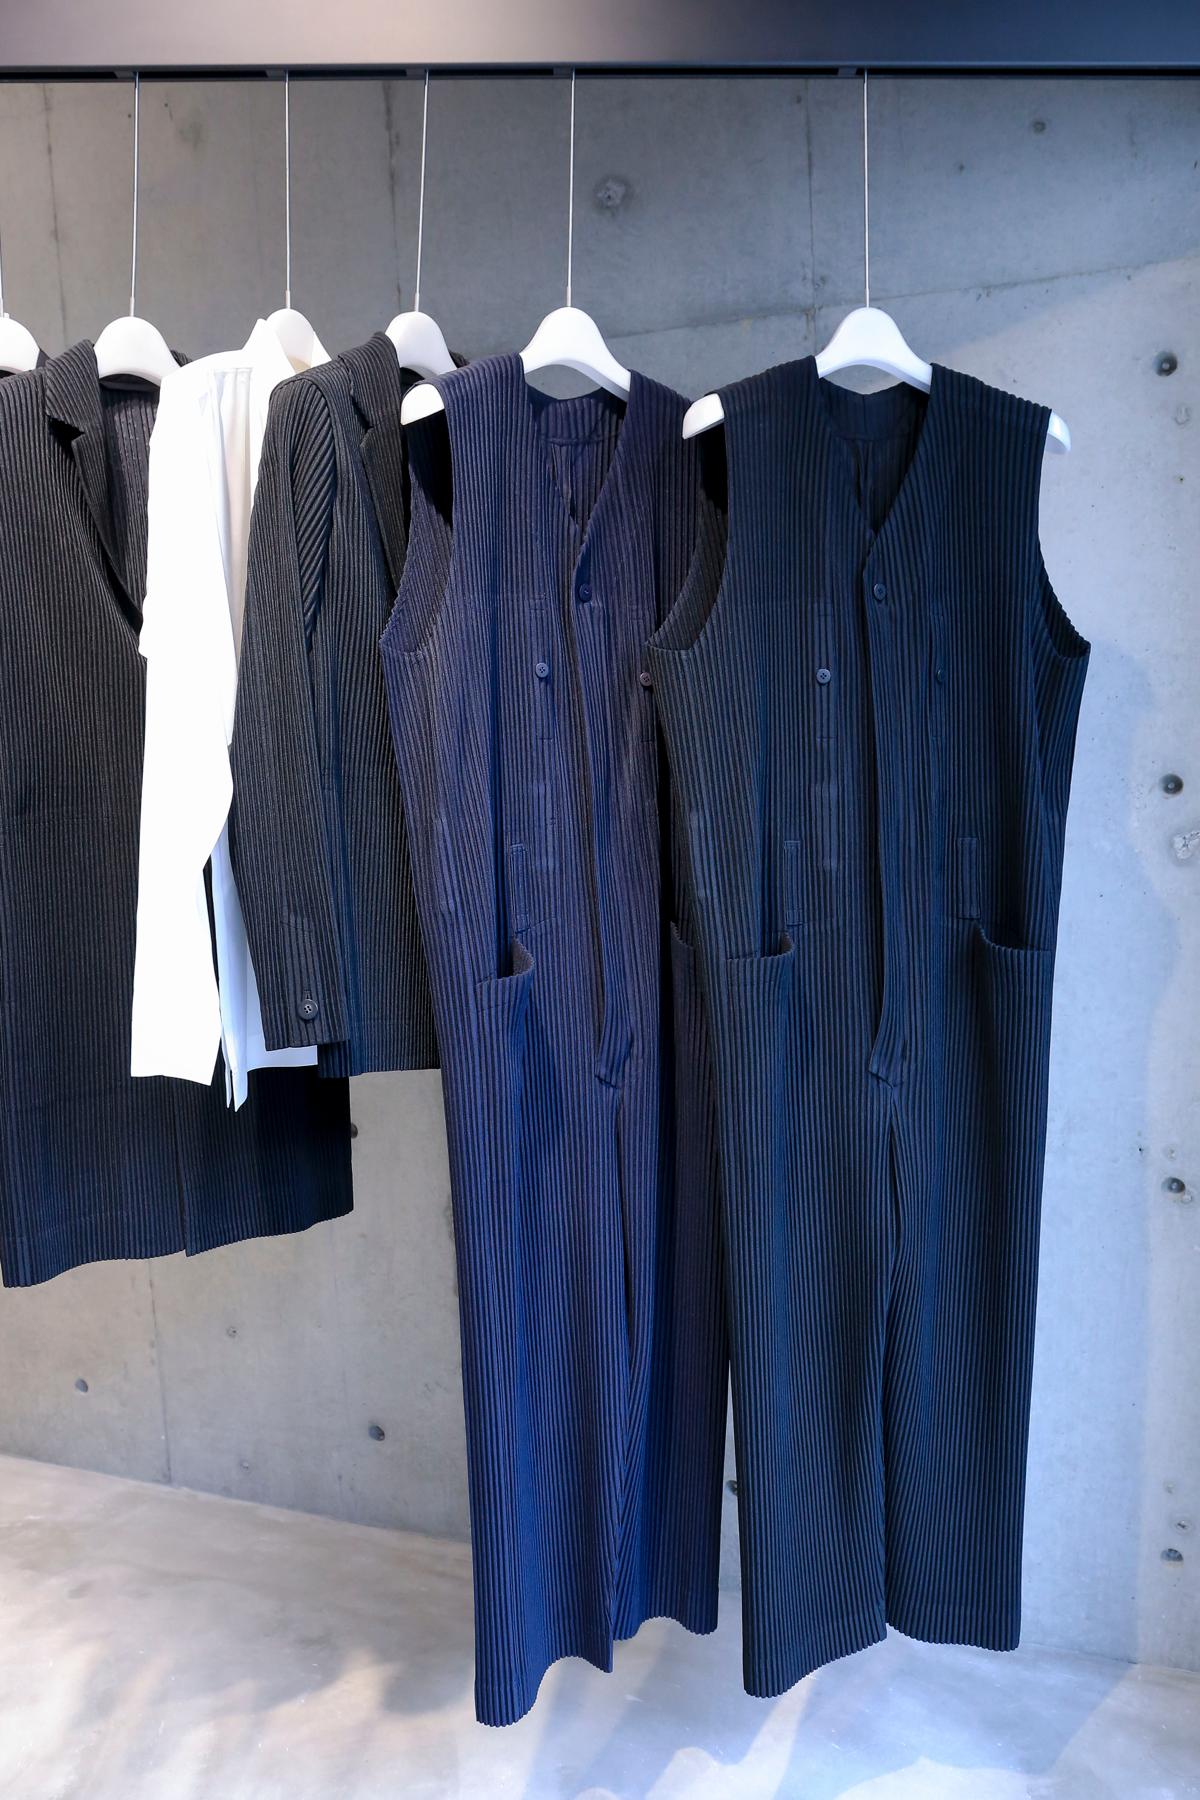 「MIYAKE ISSEY展: 三宅一生の仕事」でプリーツ加工の作業時にユニフォームとして着られているジャンプスーツ。限定20着で用意。